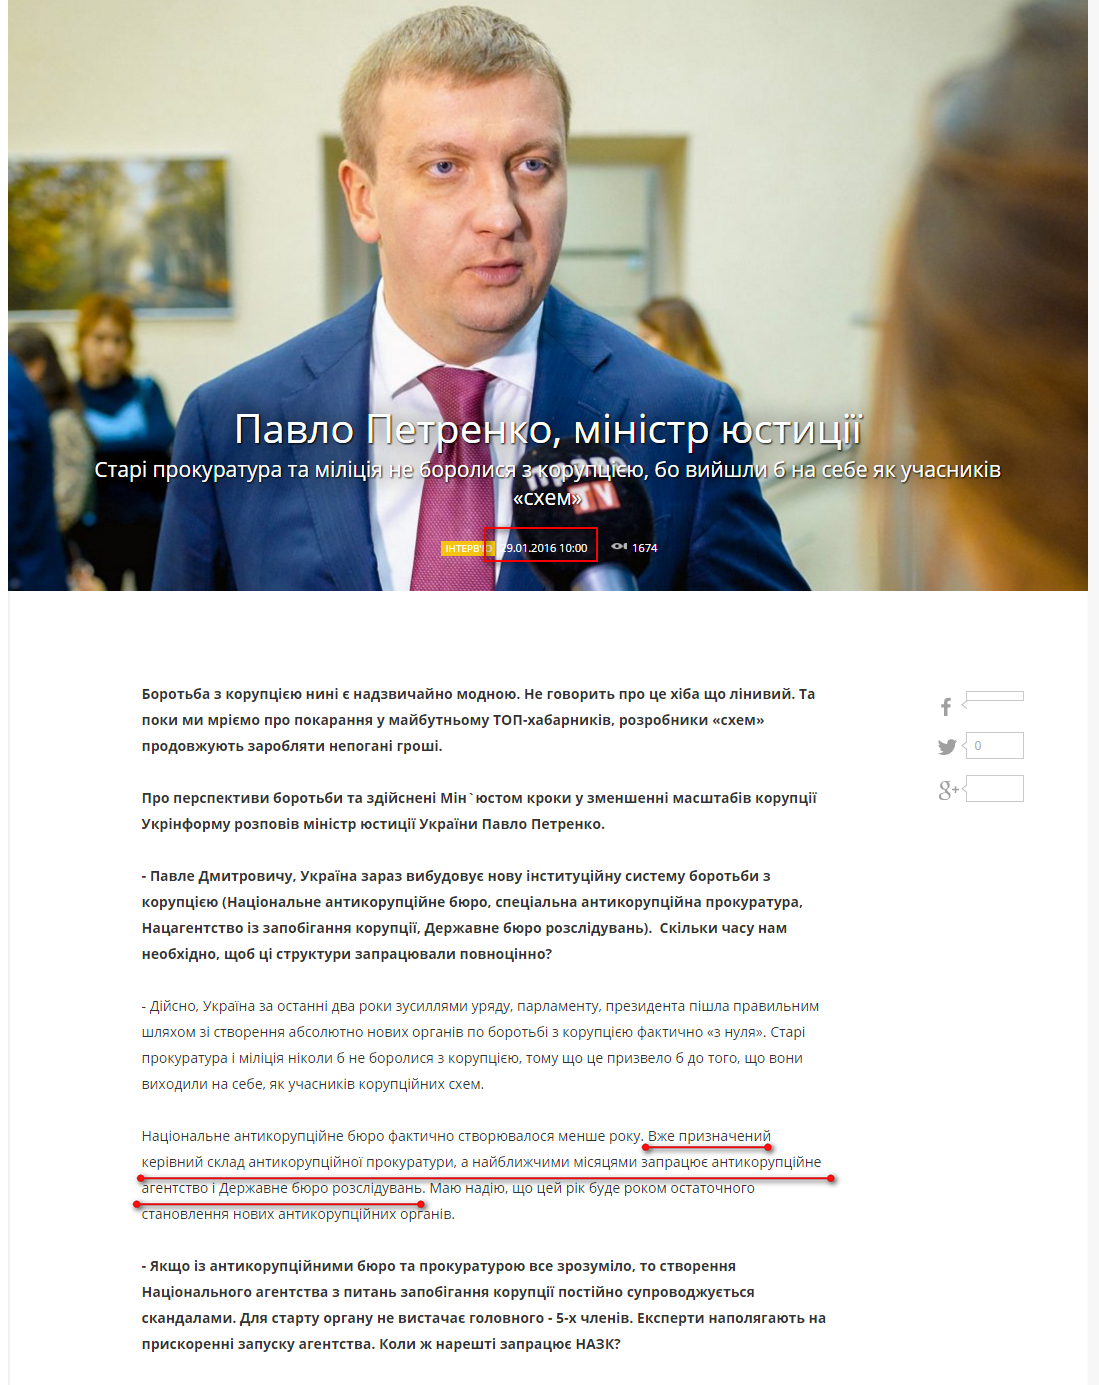 https://www.ukrinform.ua/rubric-politycs/1955617-pavlo-petrenko-ministr-usticii.html